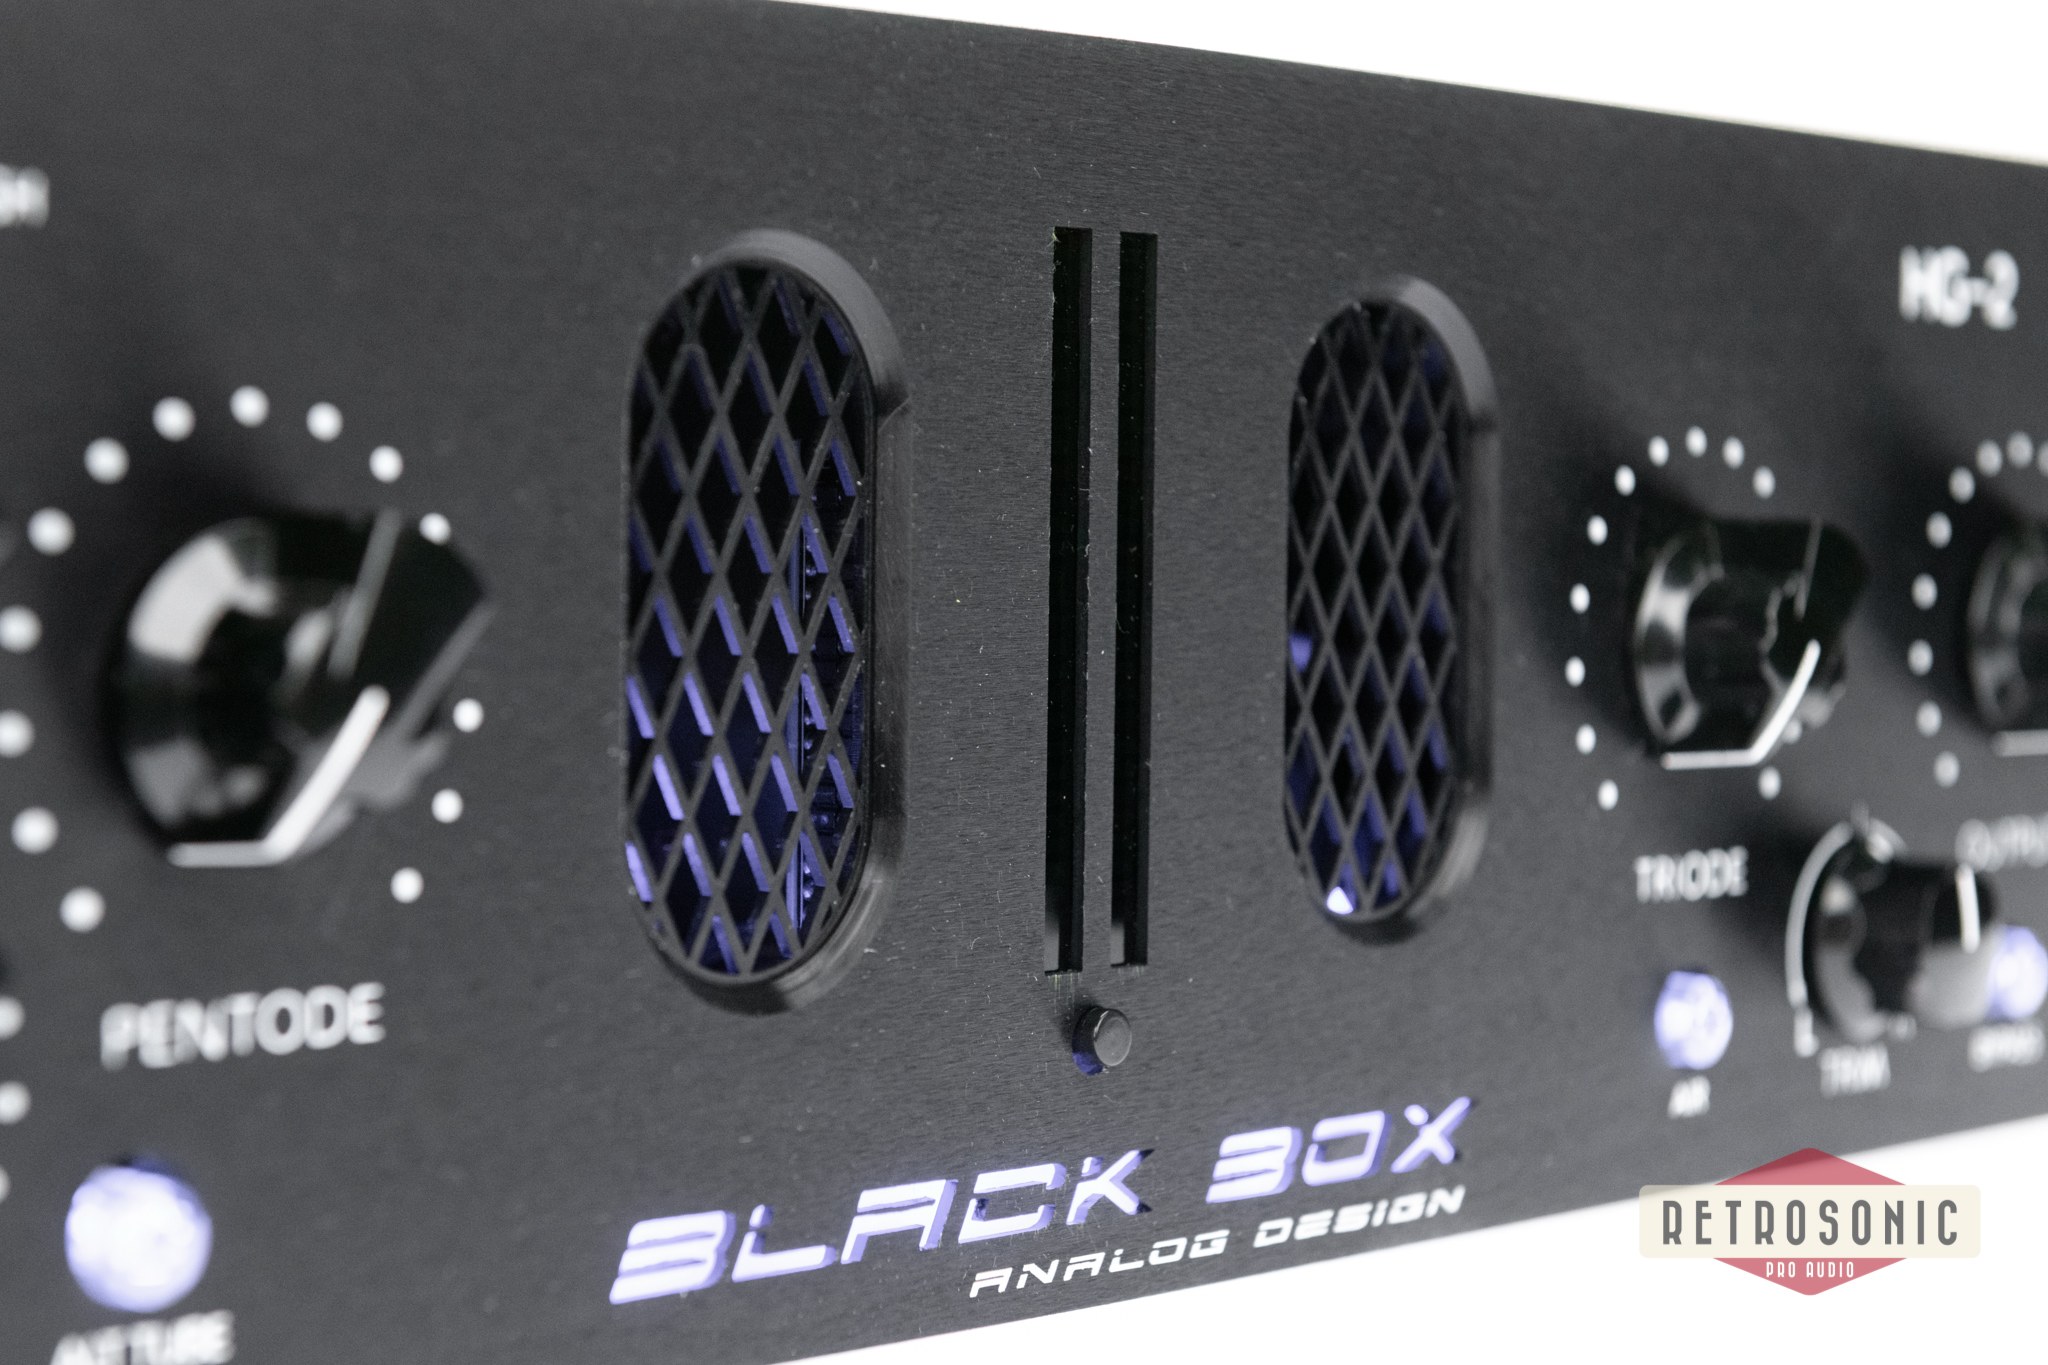 Black Box Analog Design HG-2